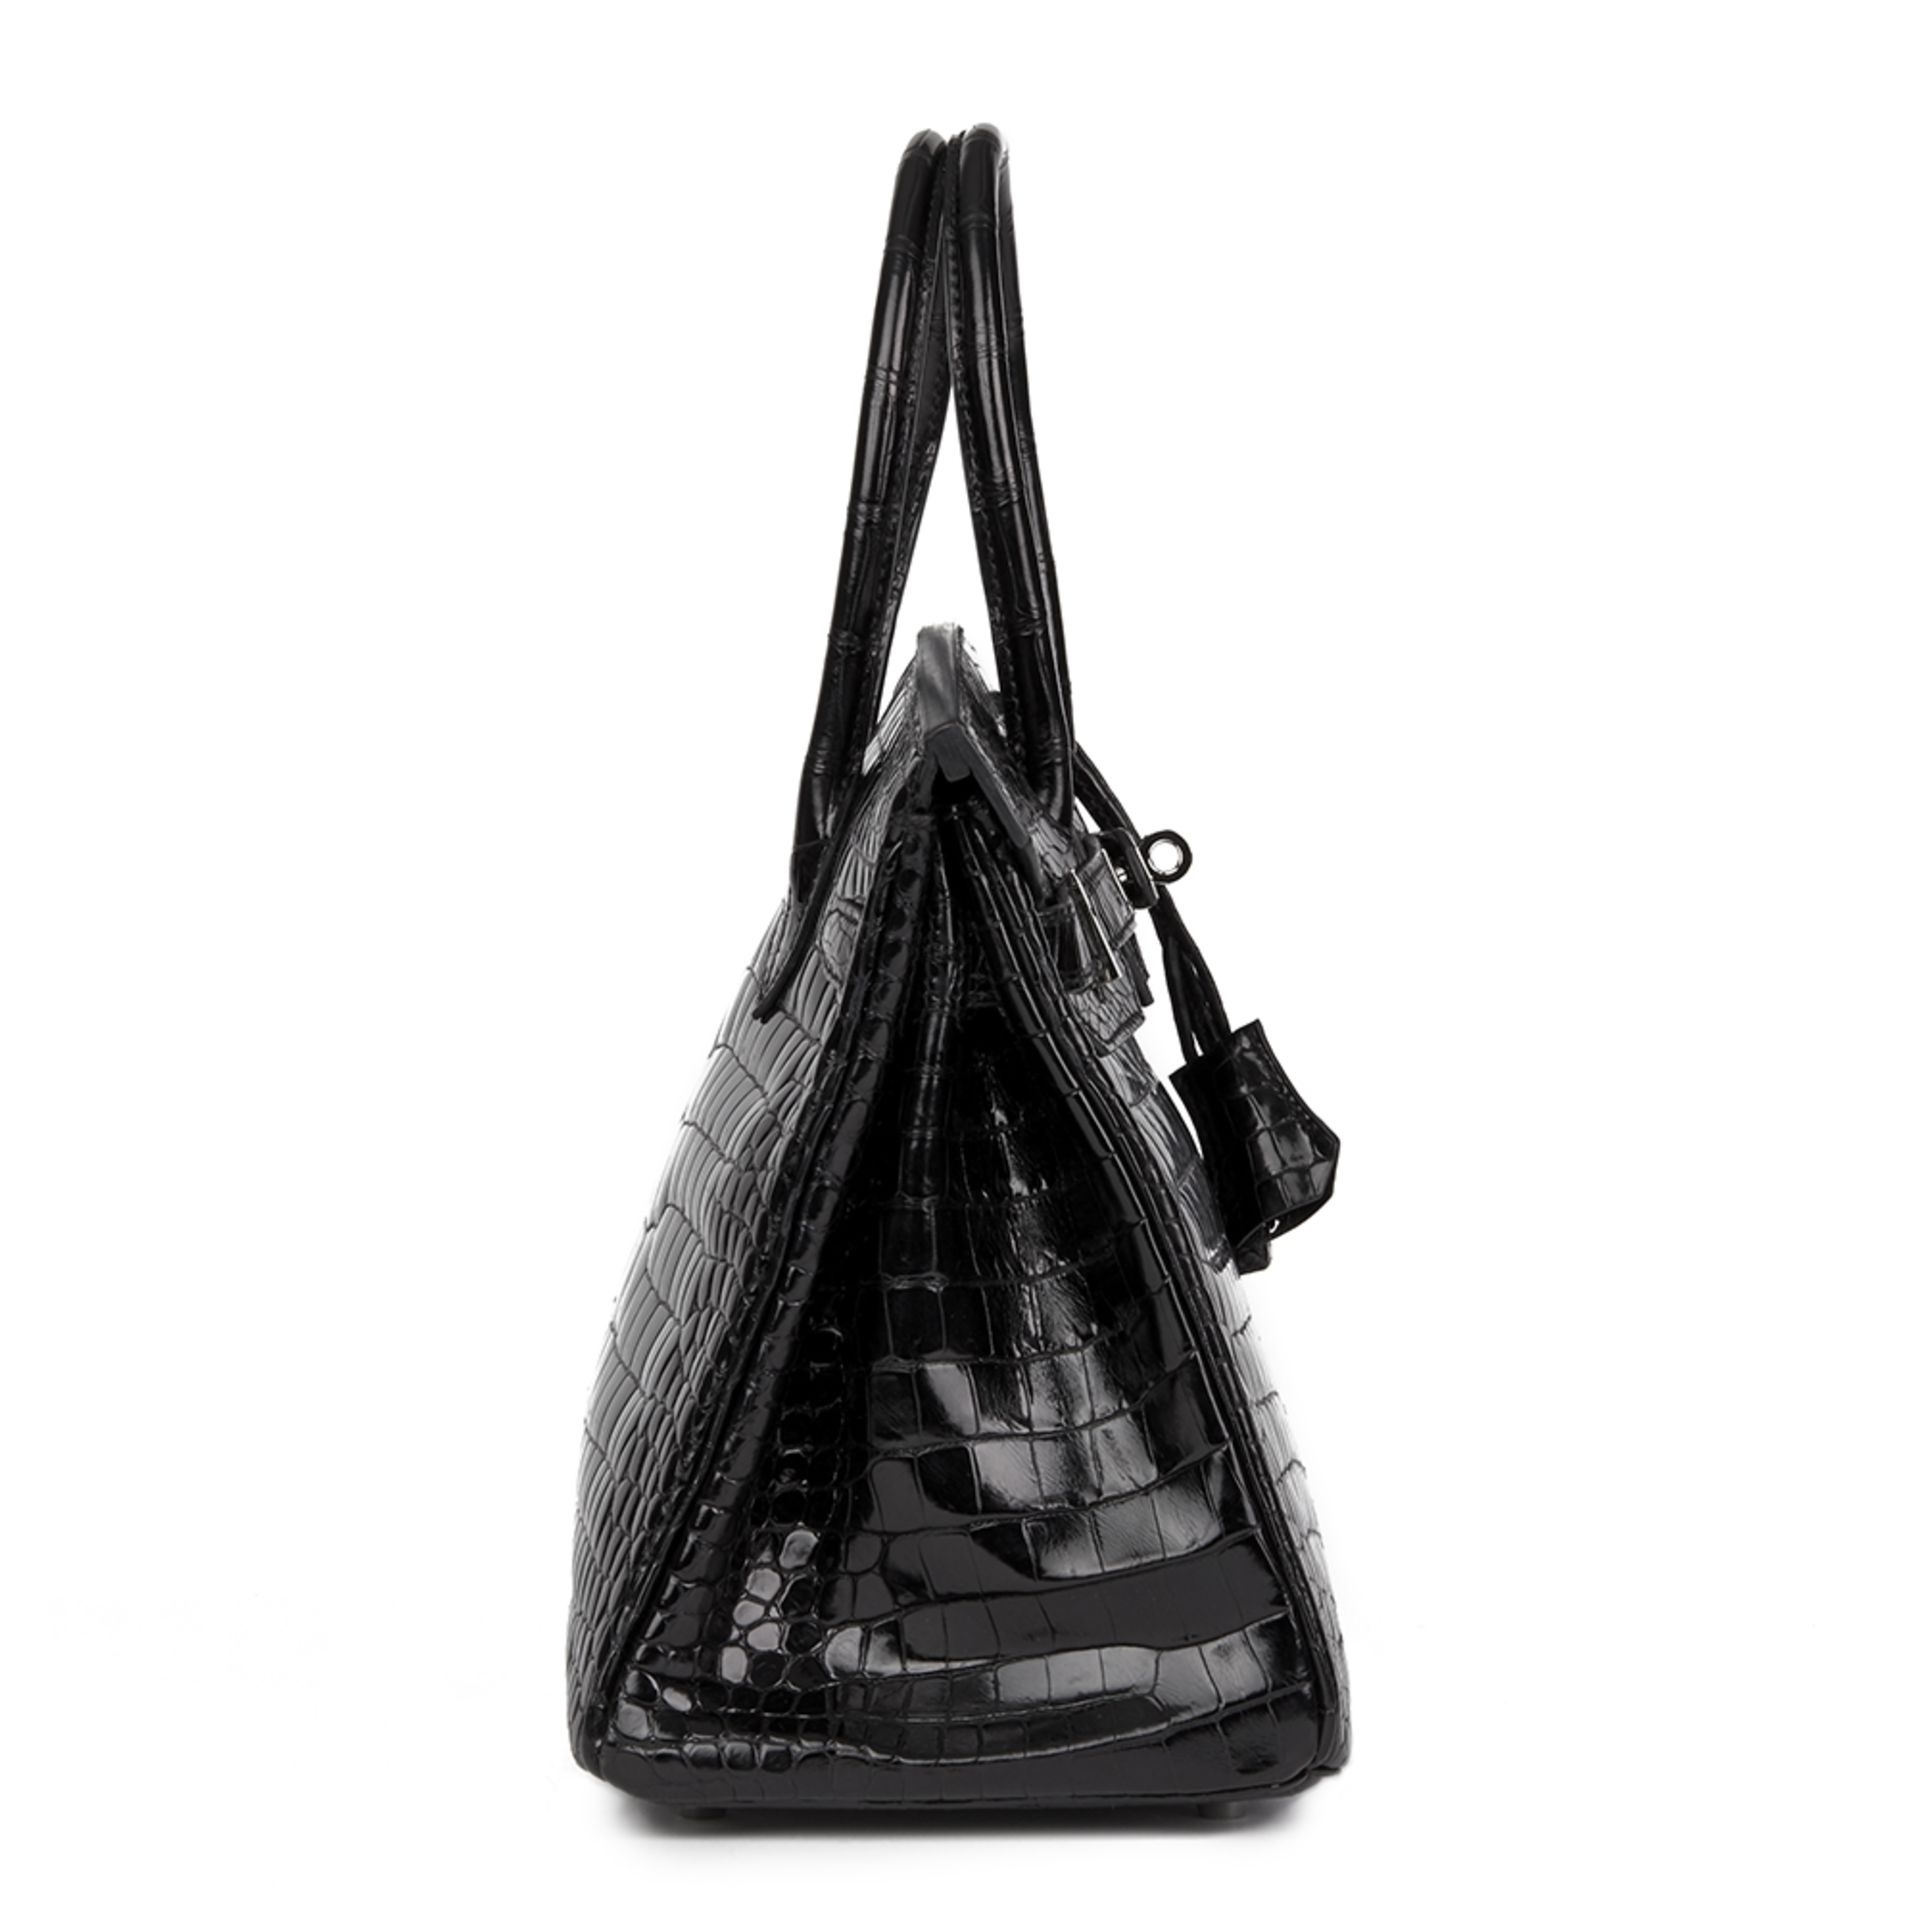 Hermès Black Shiny Porosus Crocodile Leather Birkin 30Cm - Image 12 of 12